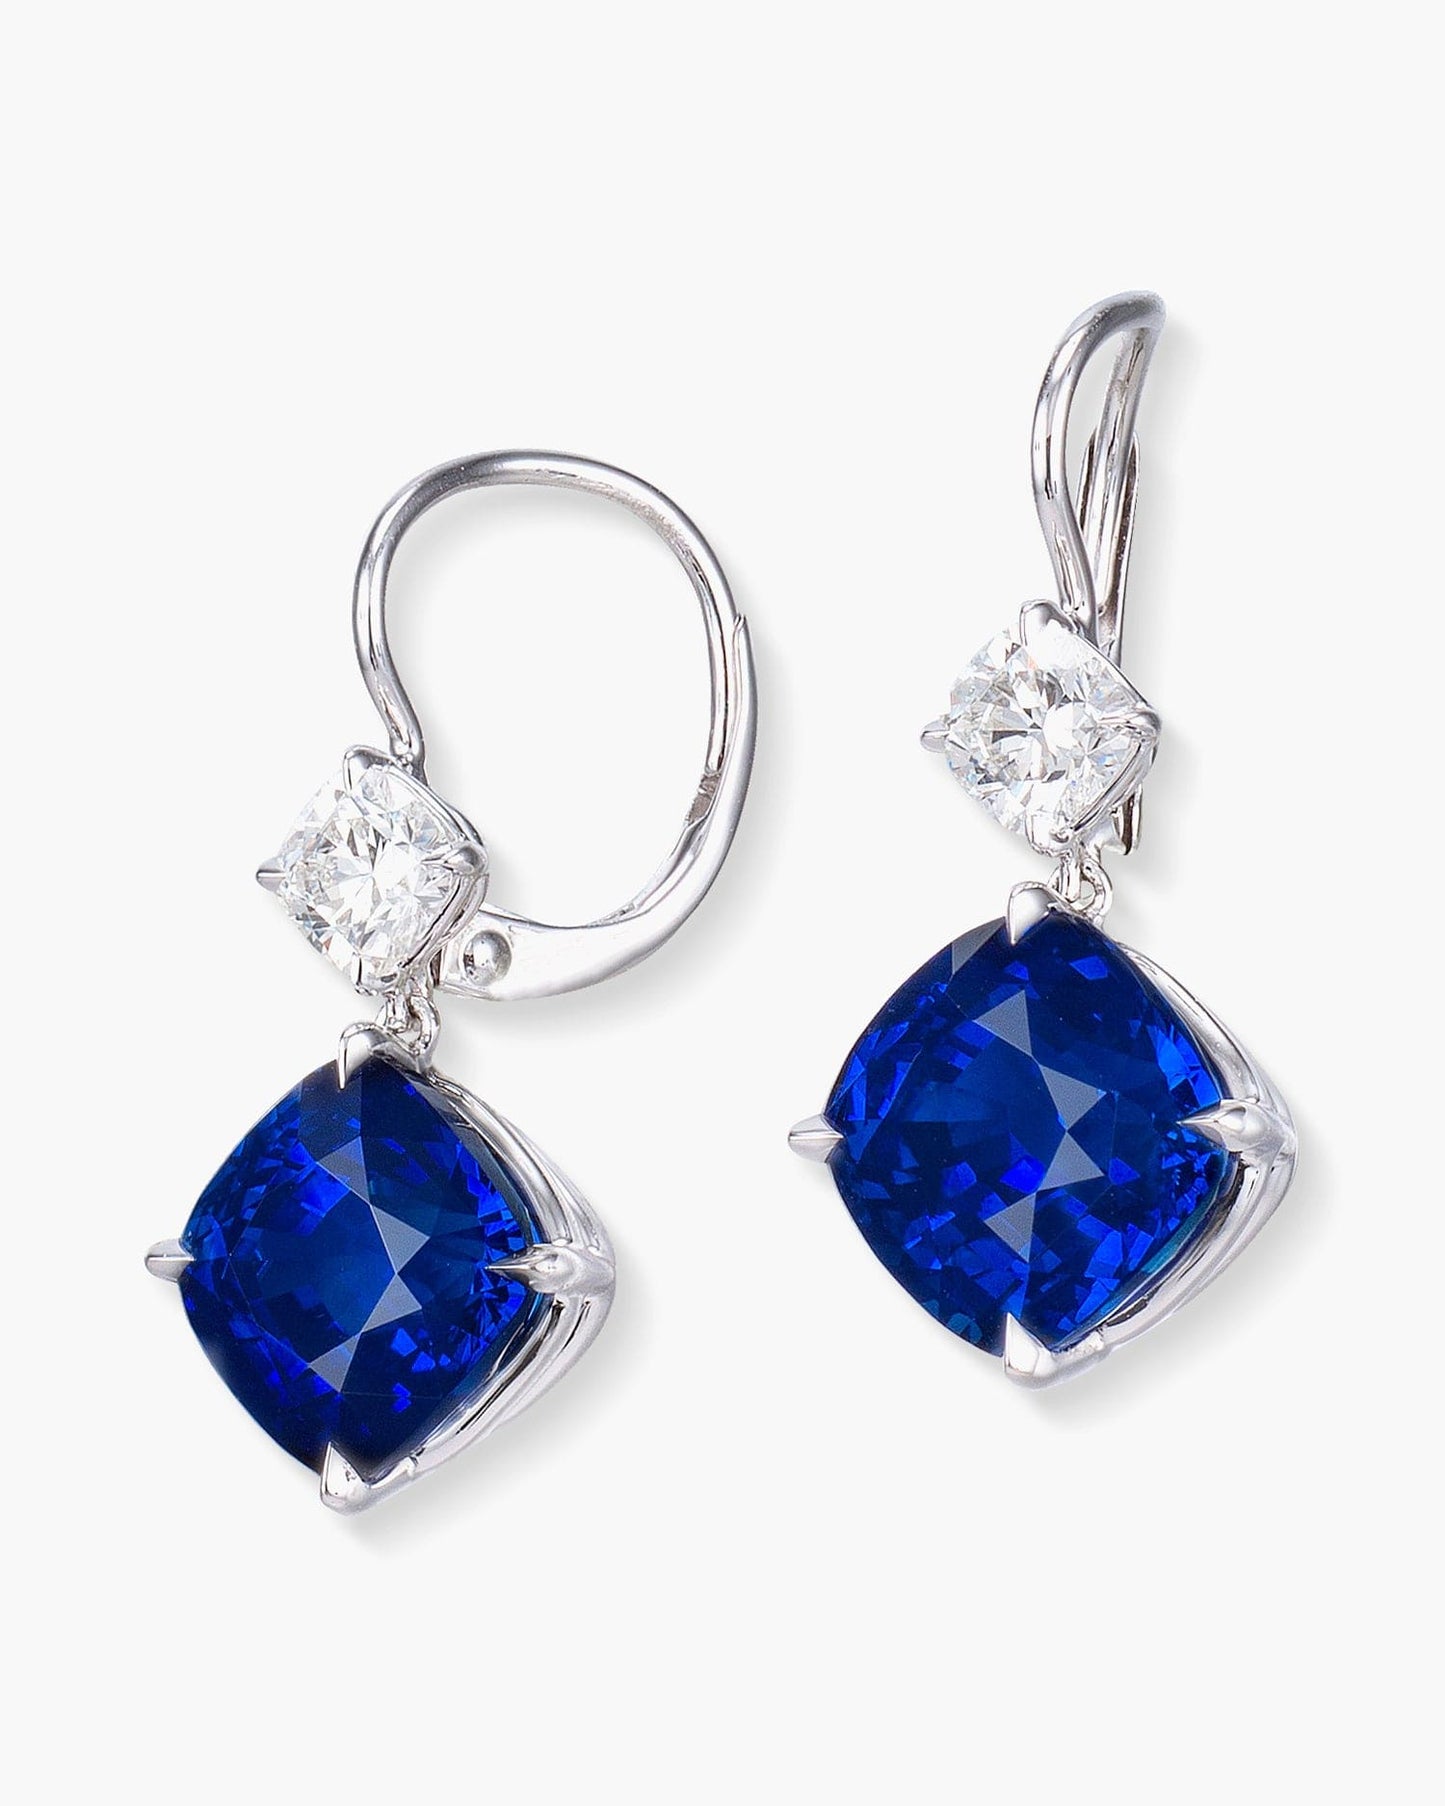 8.31 carat Cushion Cut Ceylon Sapphire and Diamond Earrings